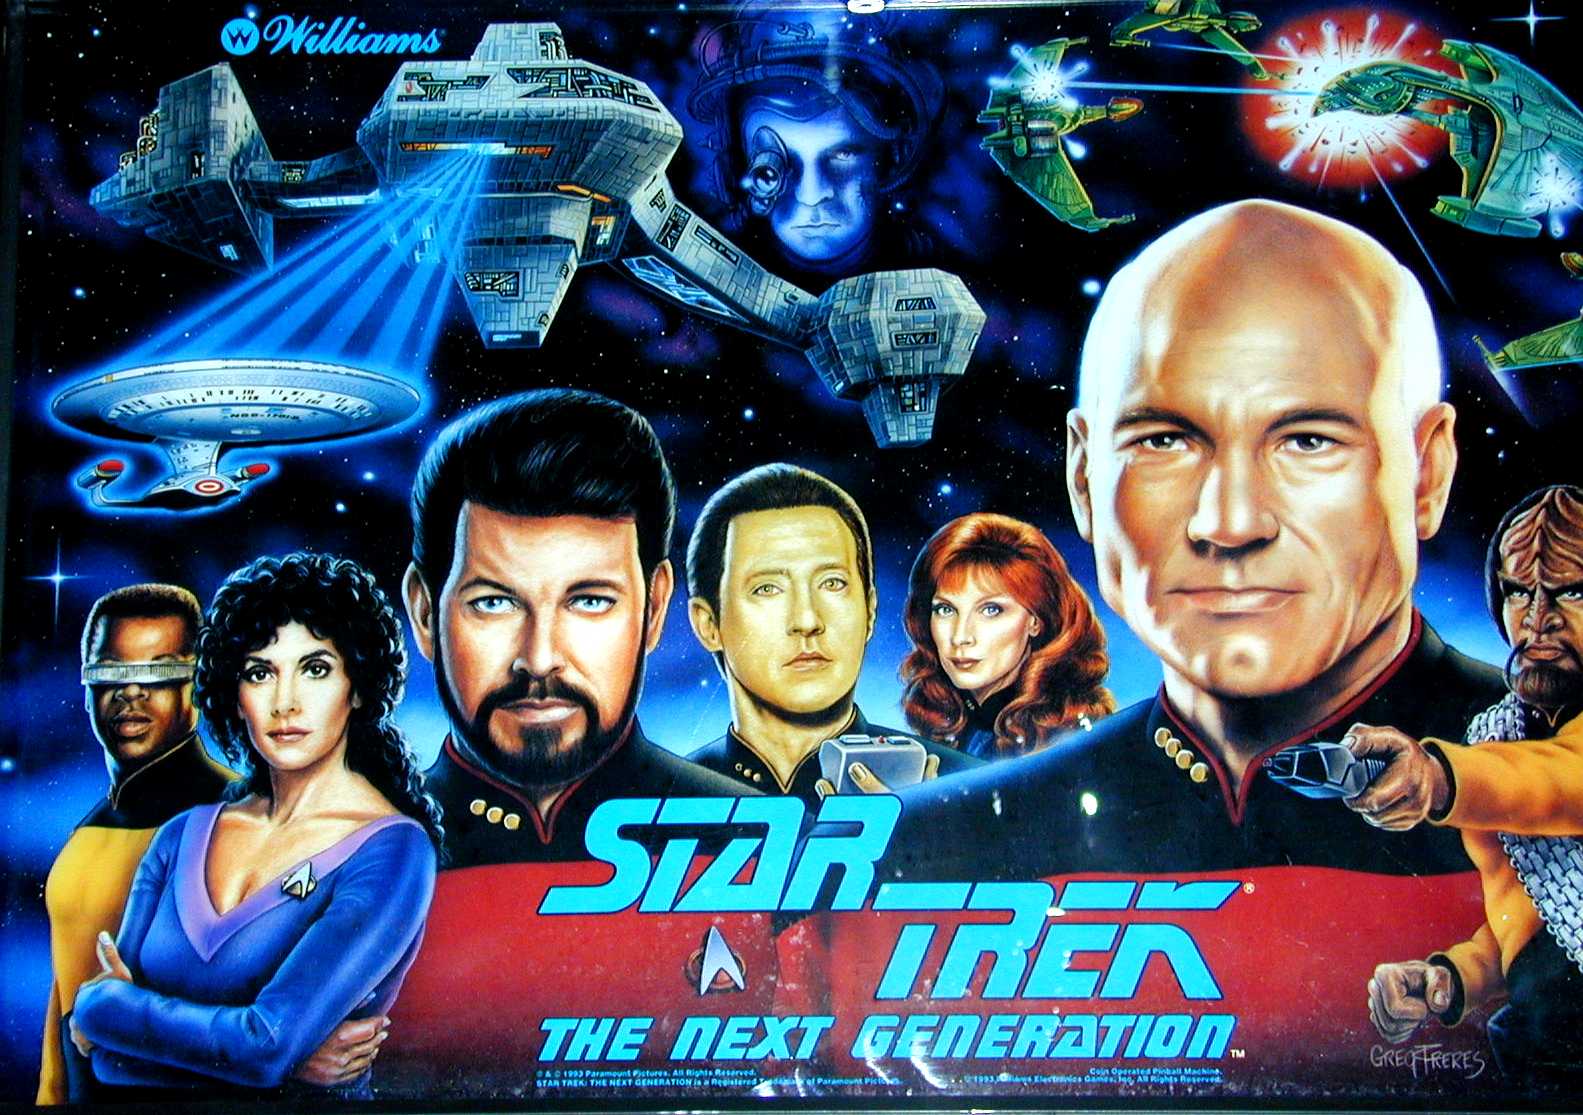 Star Trek: The Next Generation #7